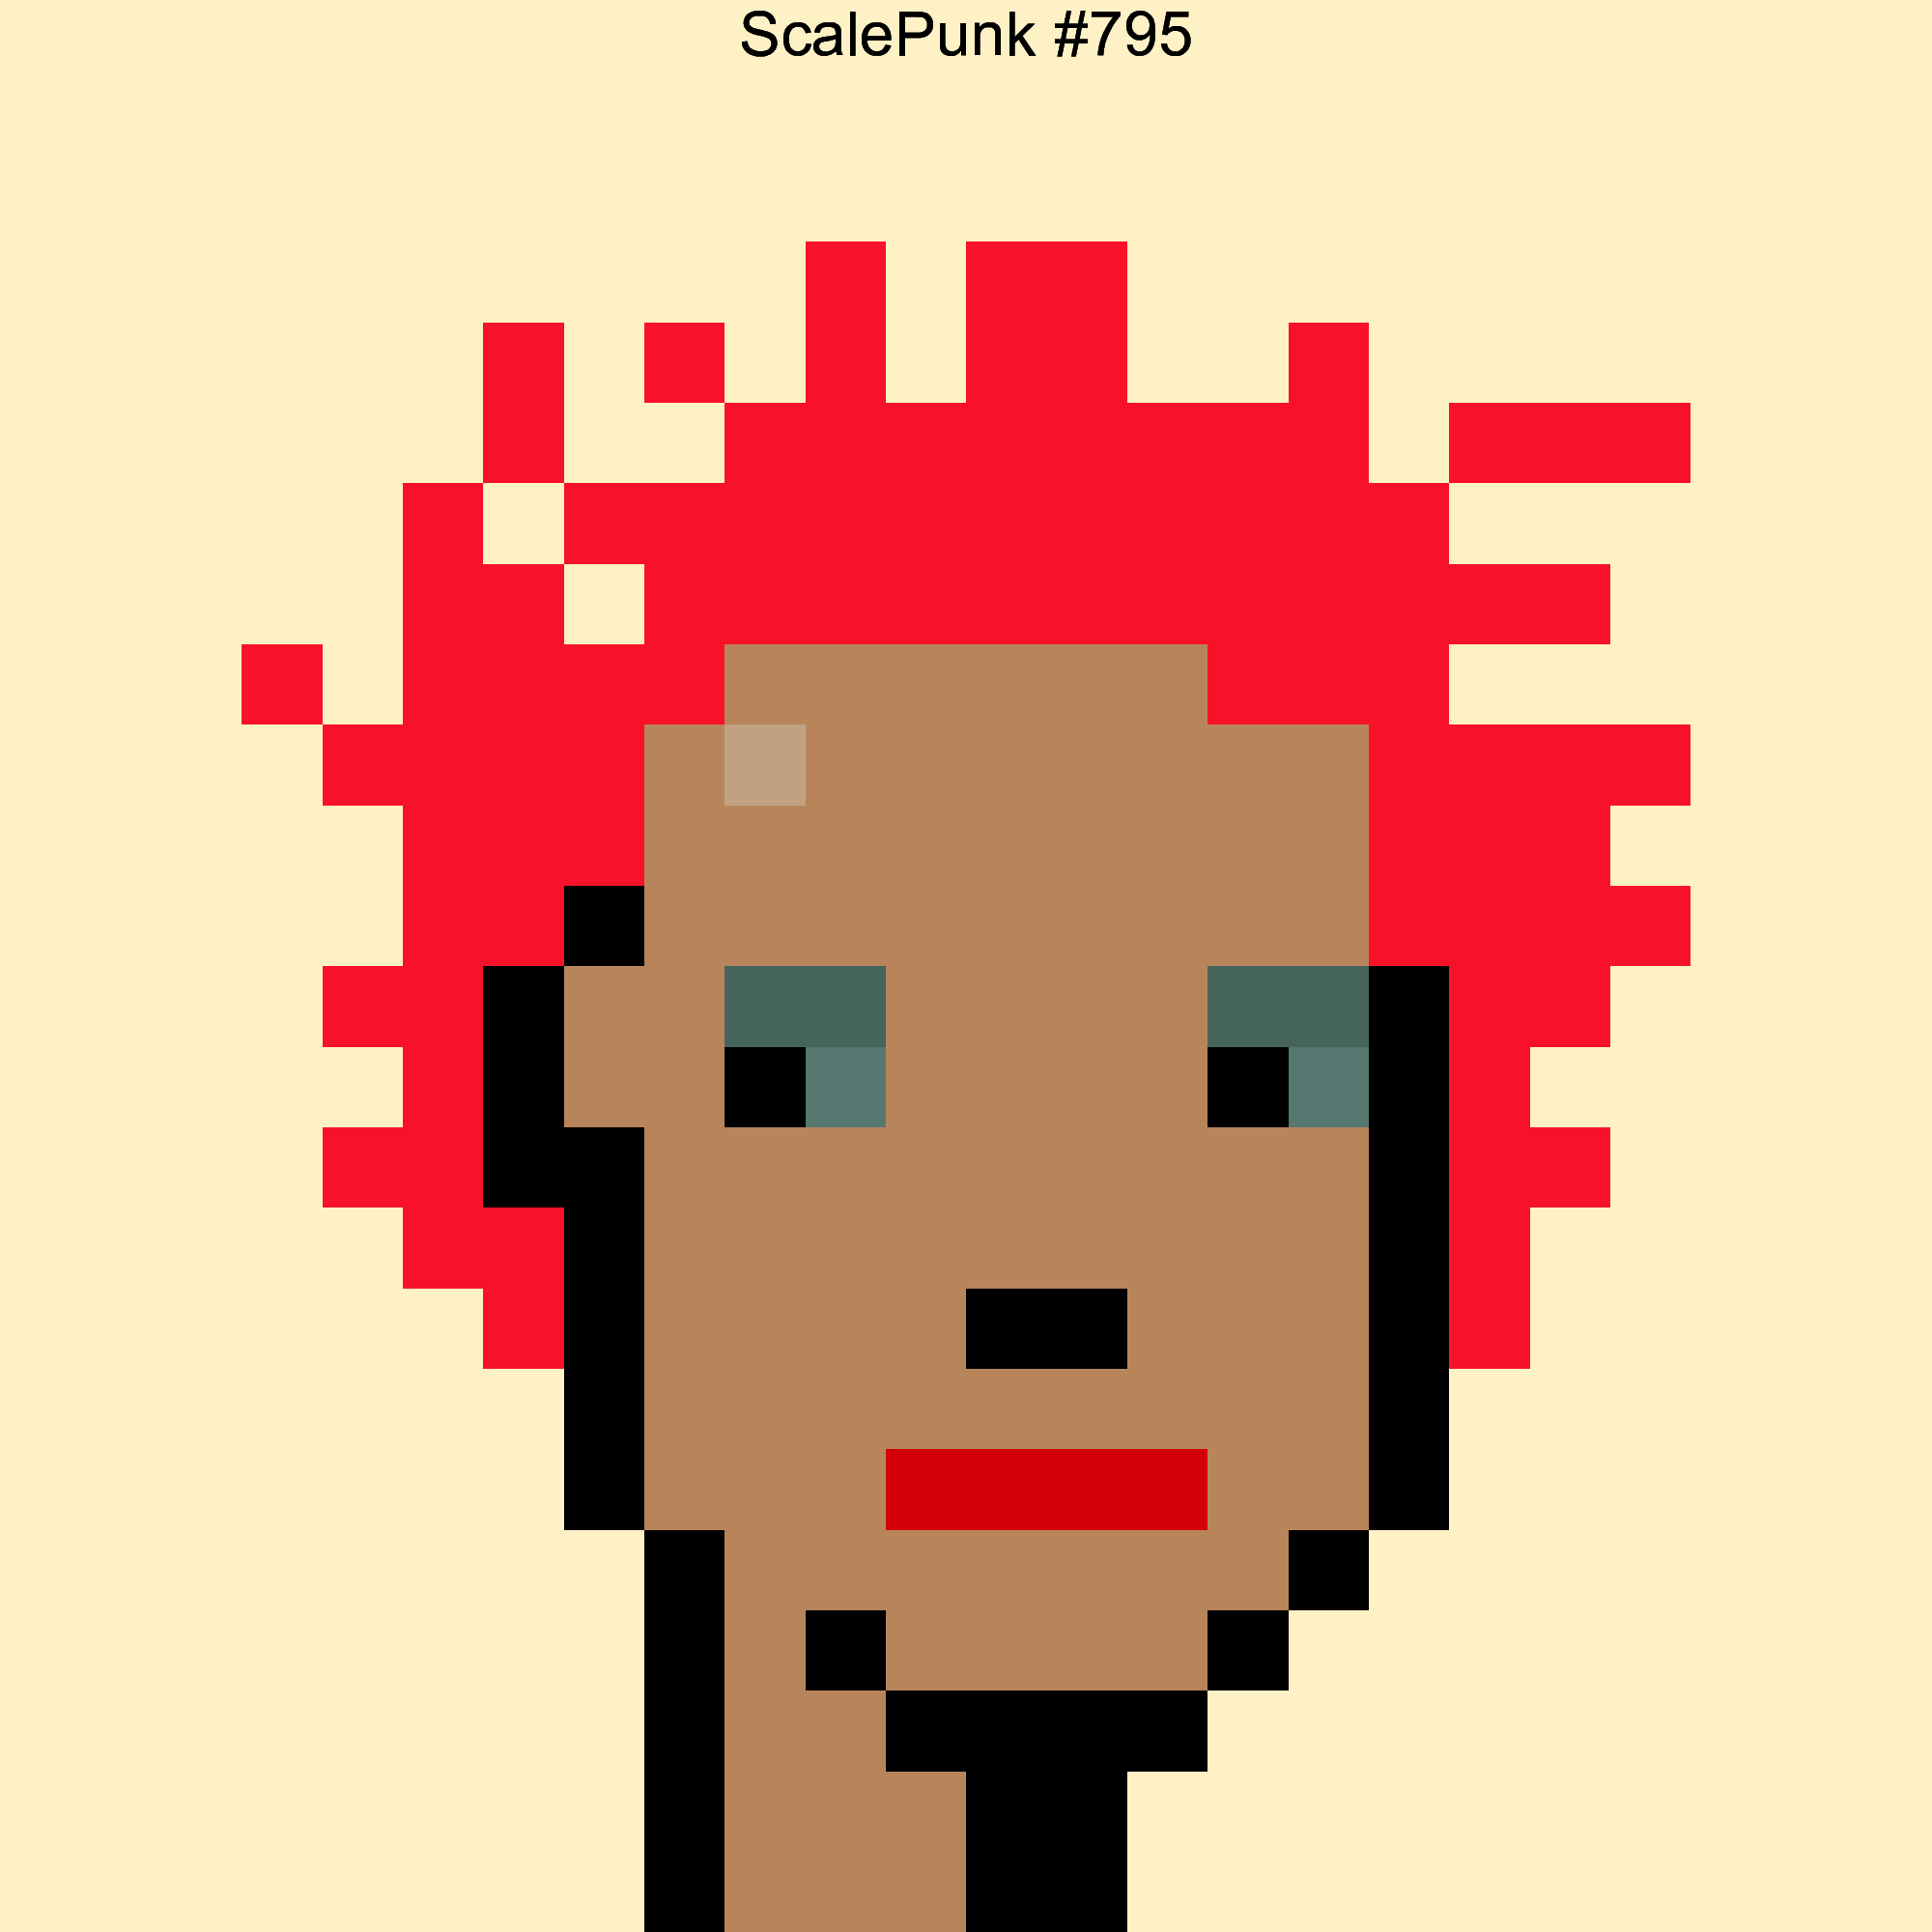 Punk 795